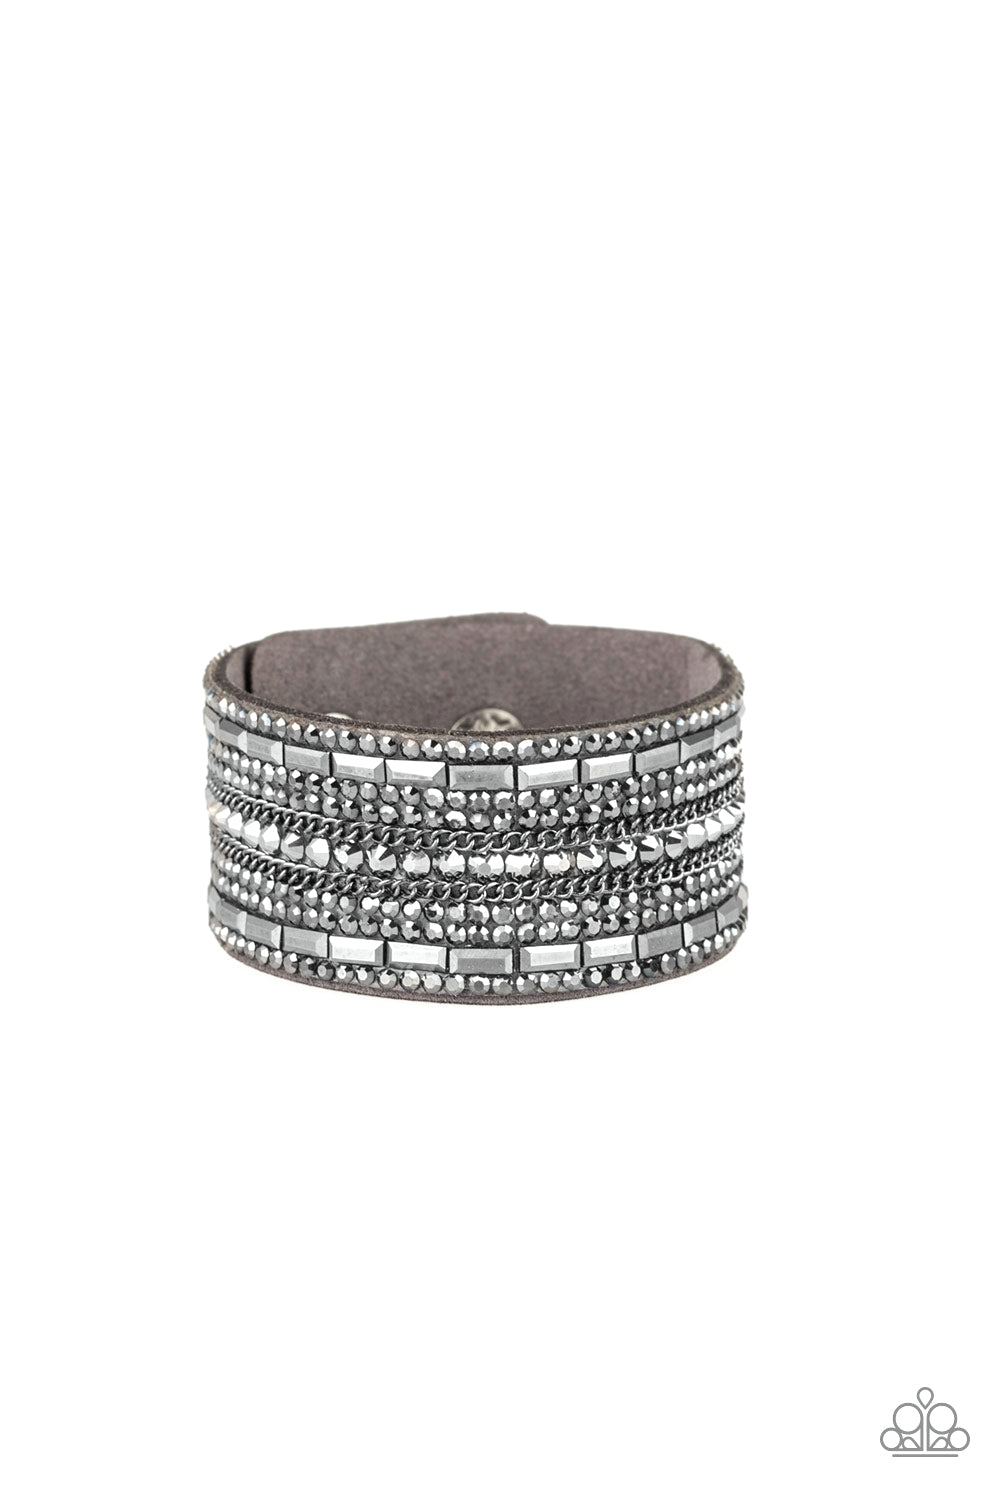 Rebel Radiance - Silver wrap bracelet